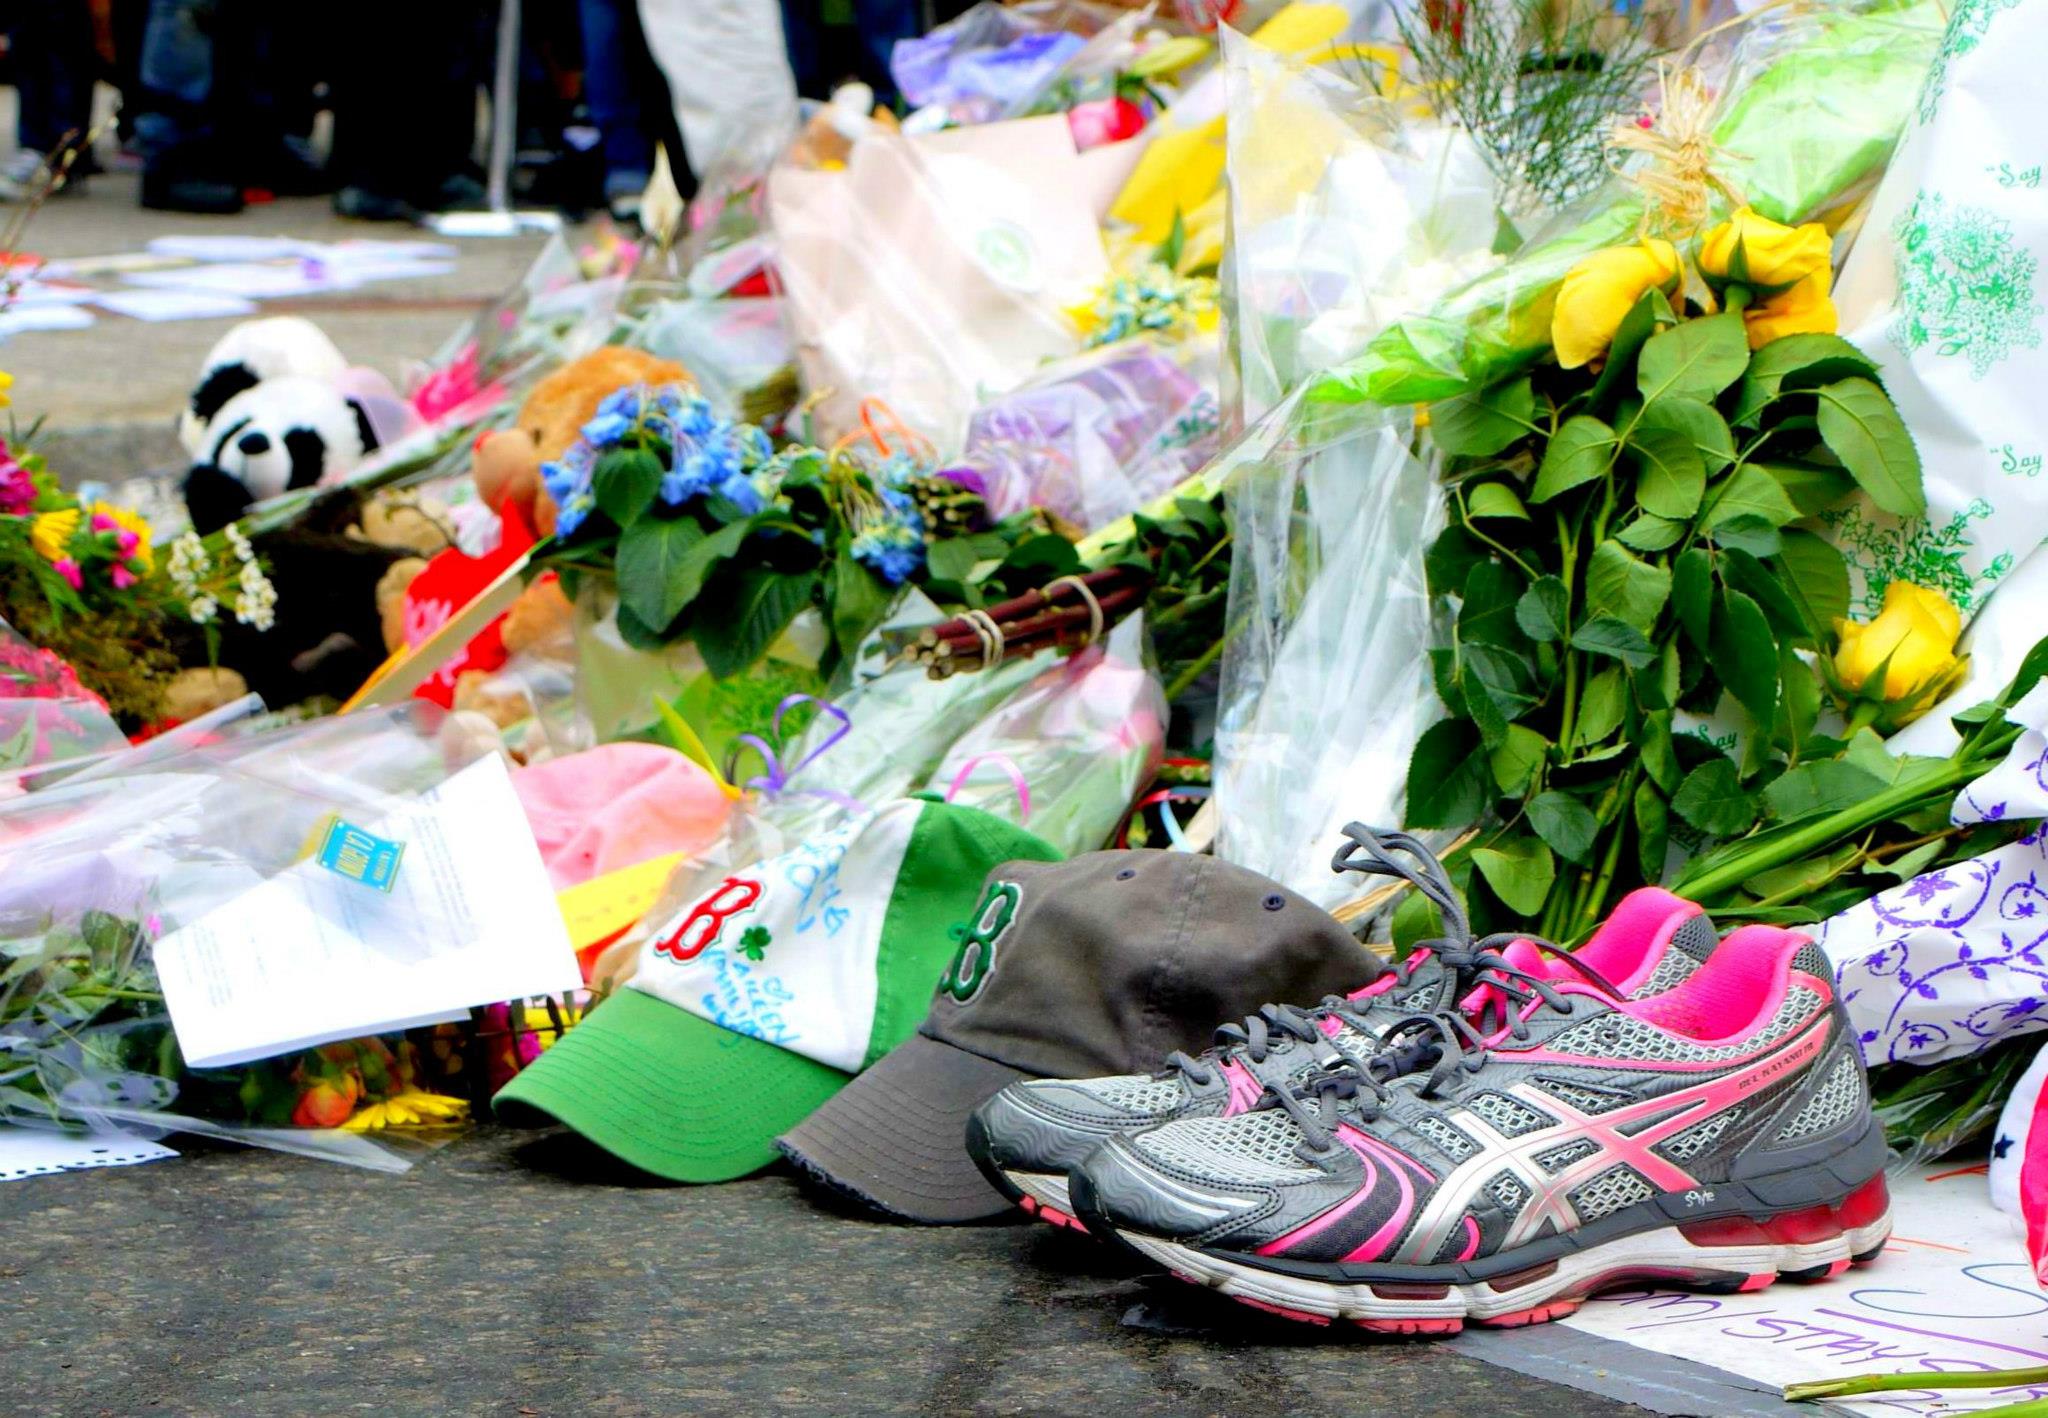    Boston Marathon 2013 |  Runner's shoes in memory and solidarity  